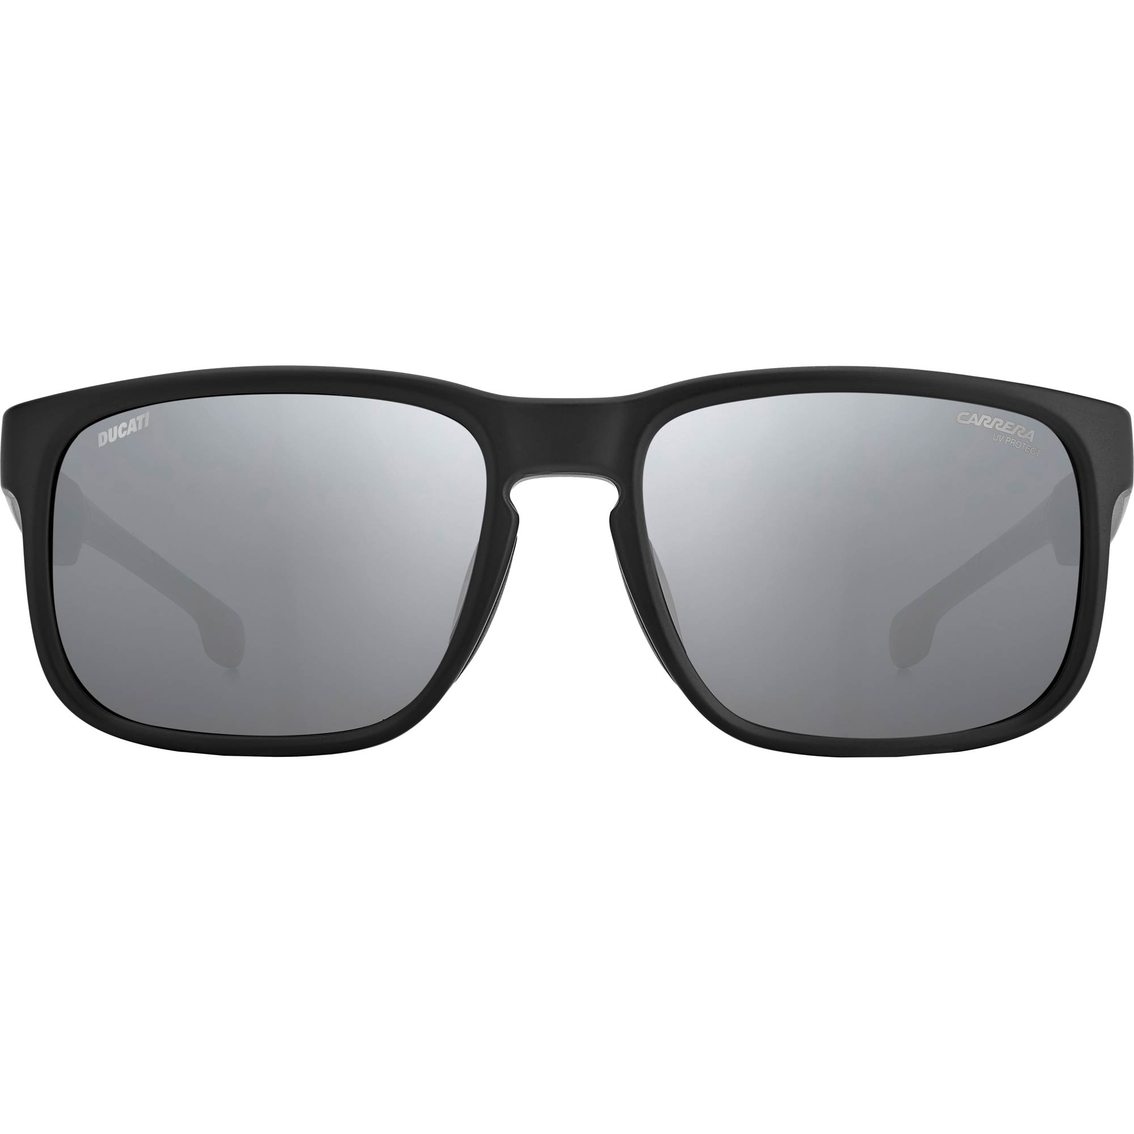 Carrera Ducati Sunglasses Carduc001/s | Sunglasses | Clothing ...